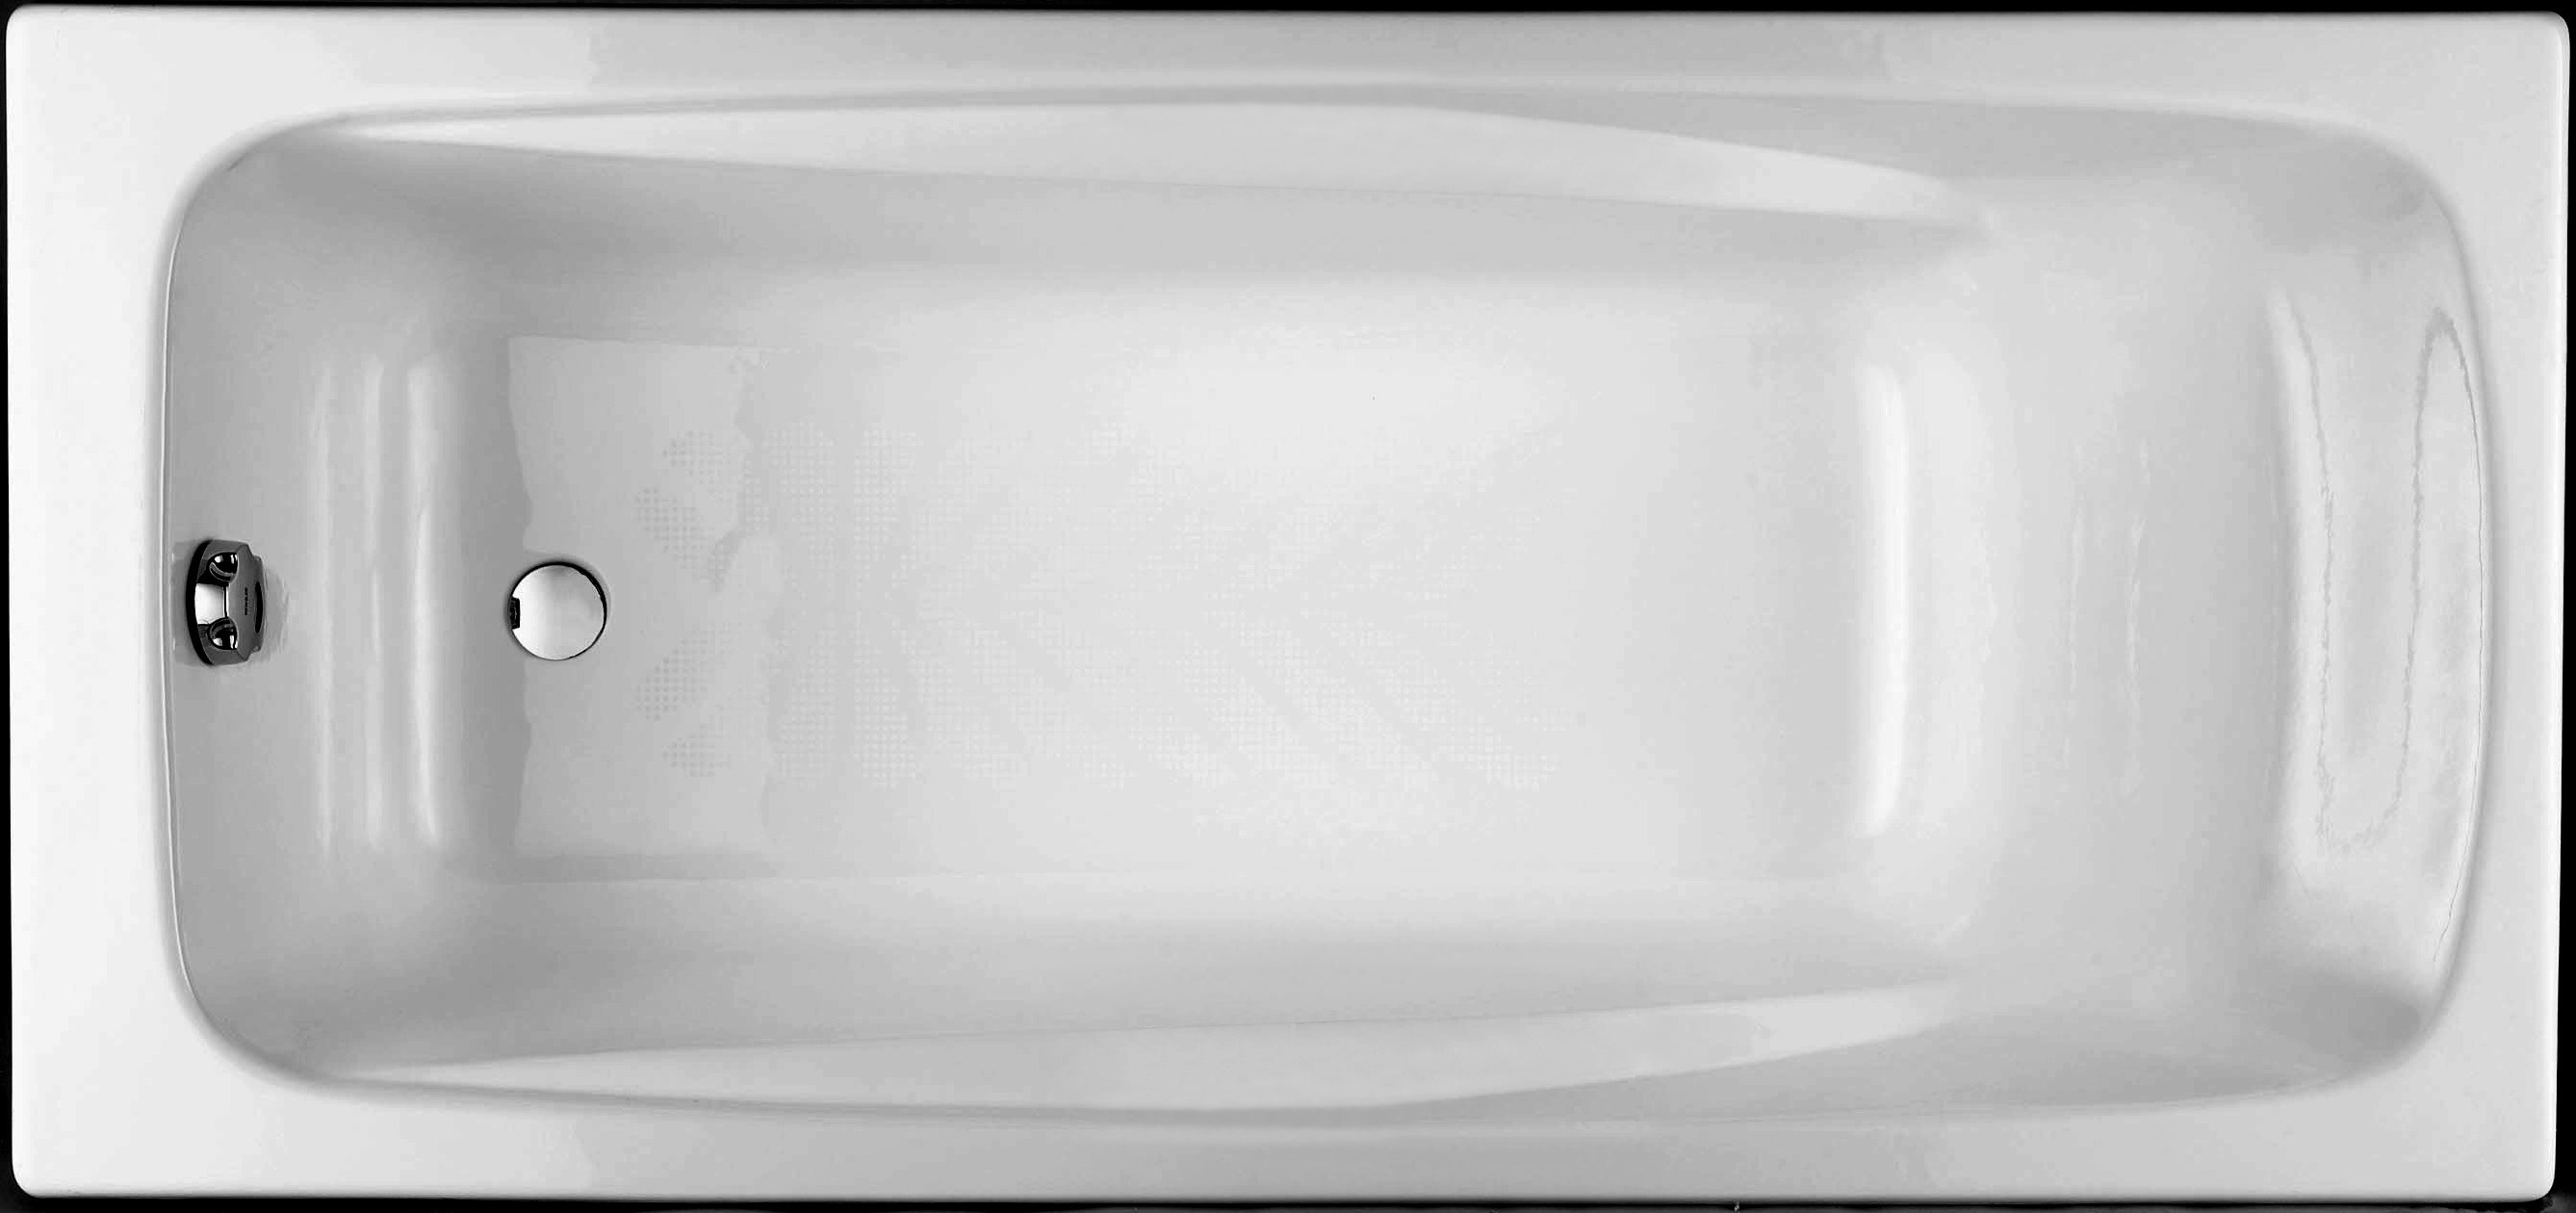 REPOS - Ванна чугунная без ручек  170 х 80 см